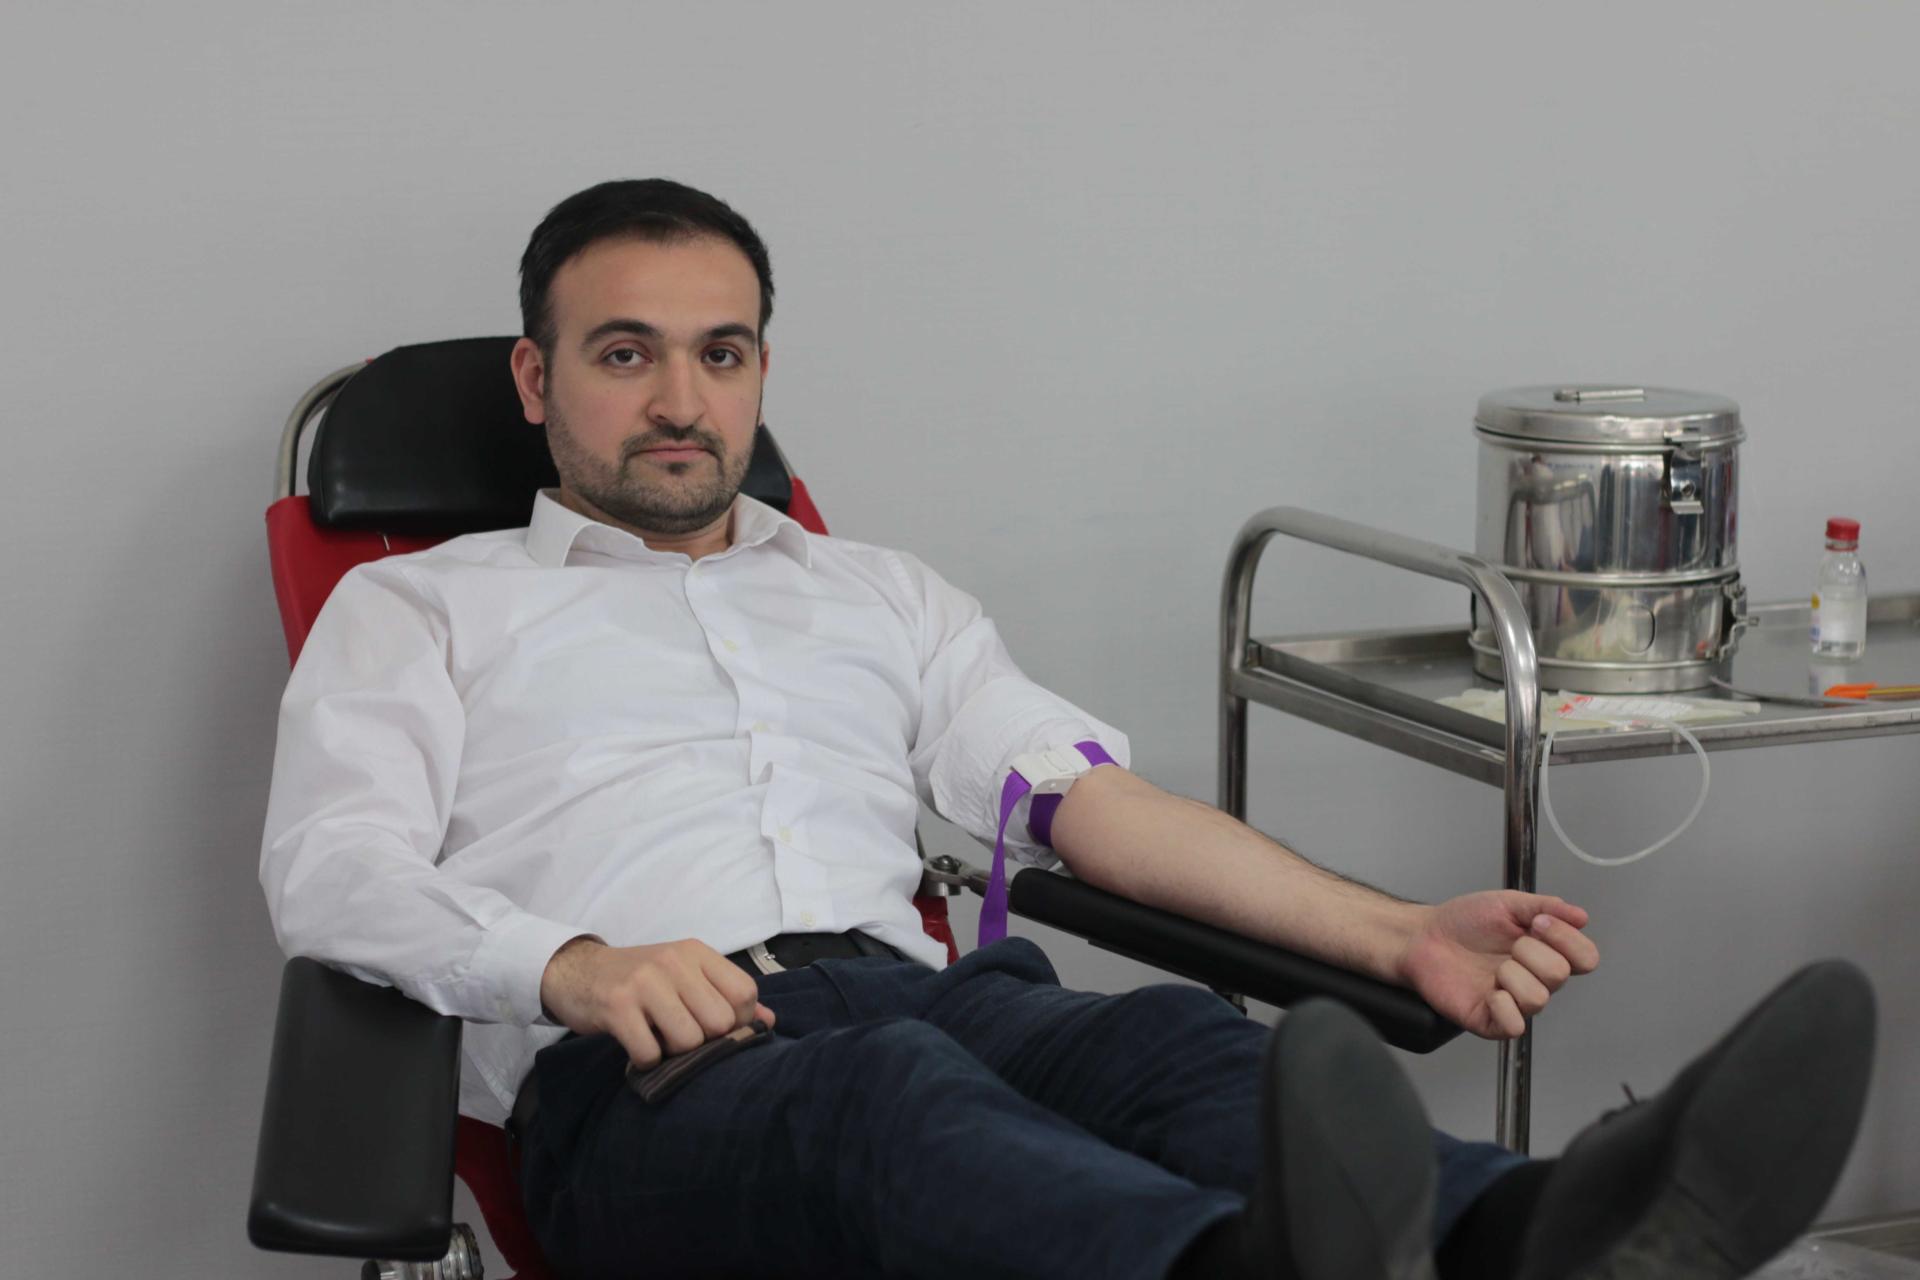 Blood donation campaign held at Azerbaijan's AtaBank (PHOTO) - Gallery Image